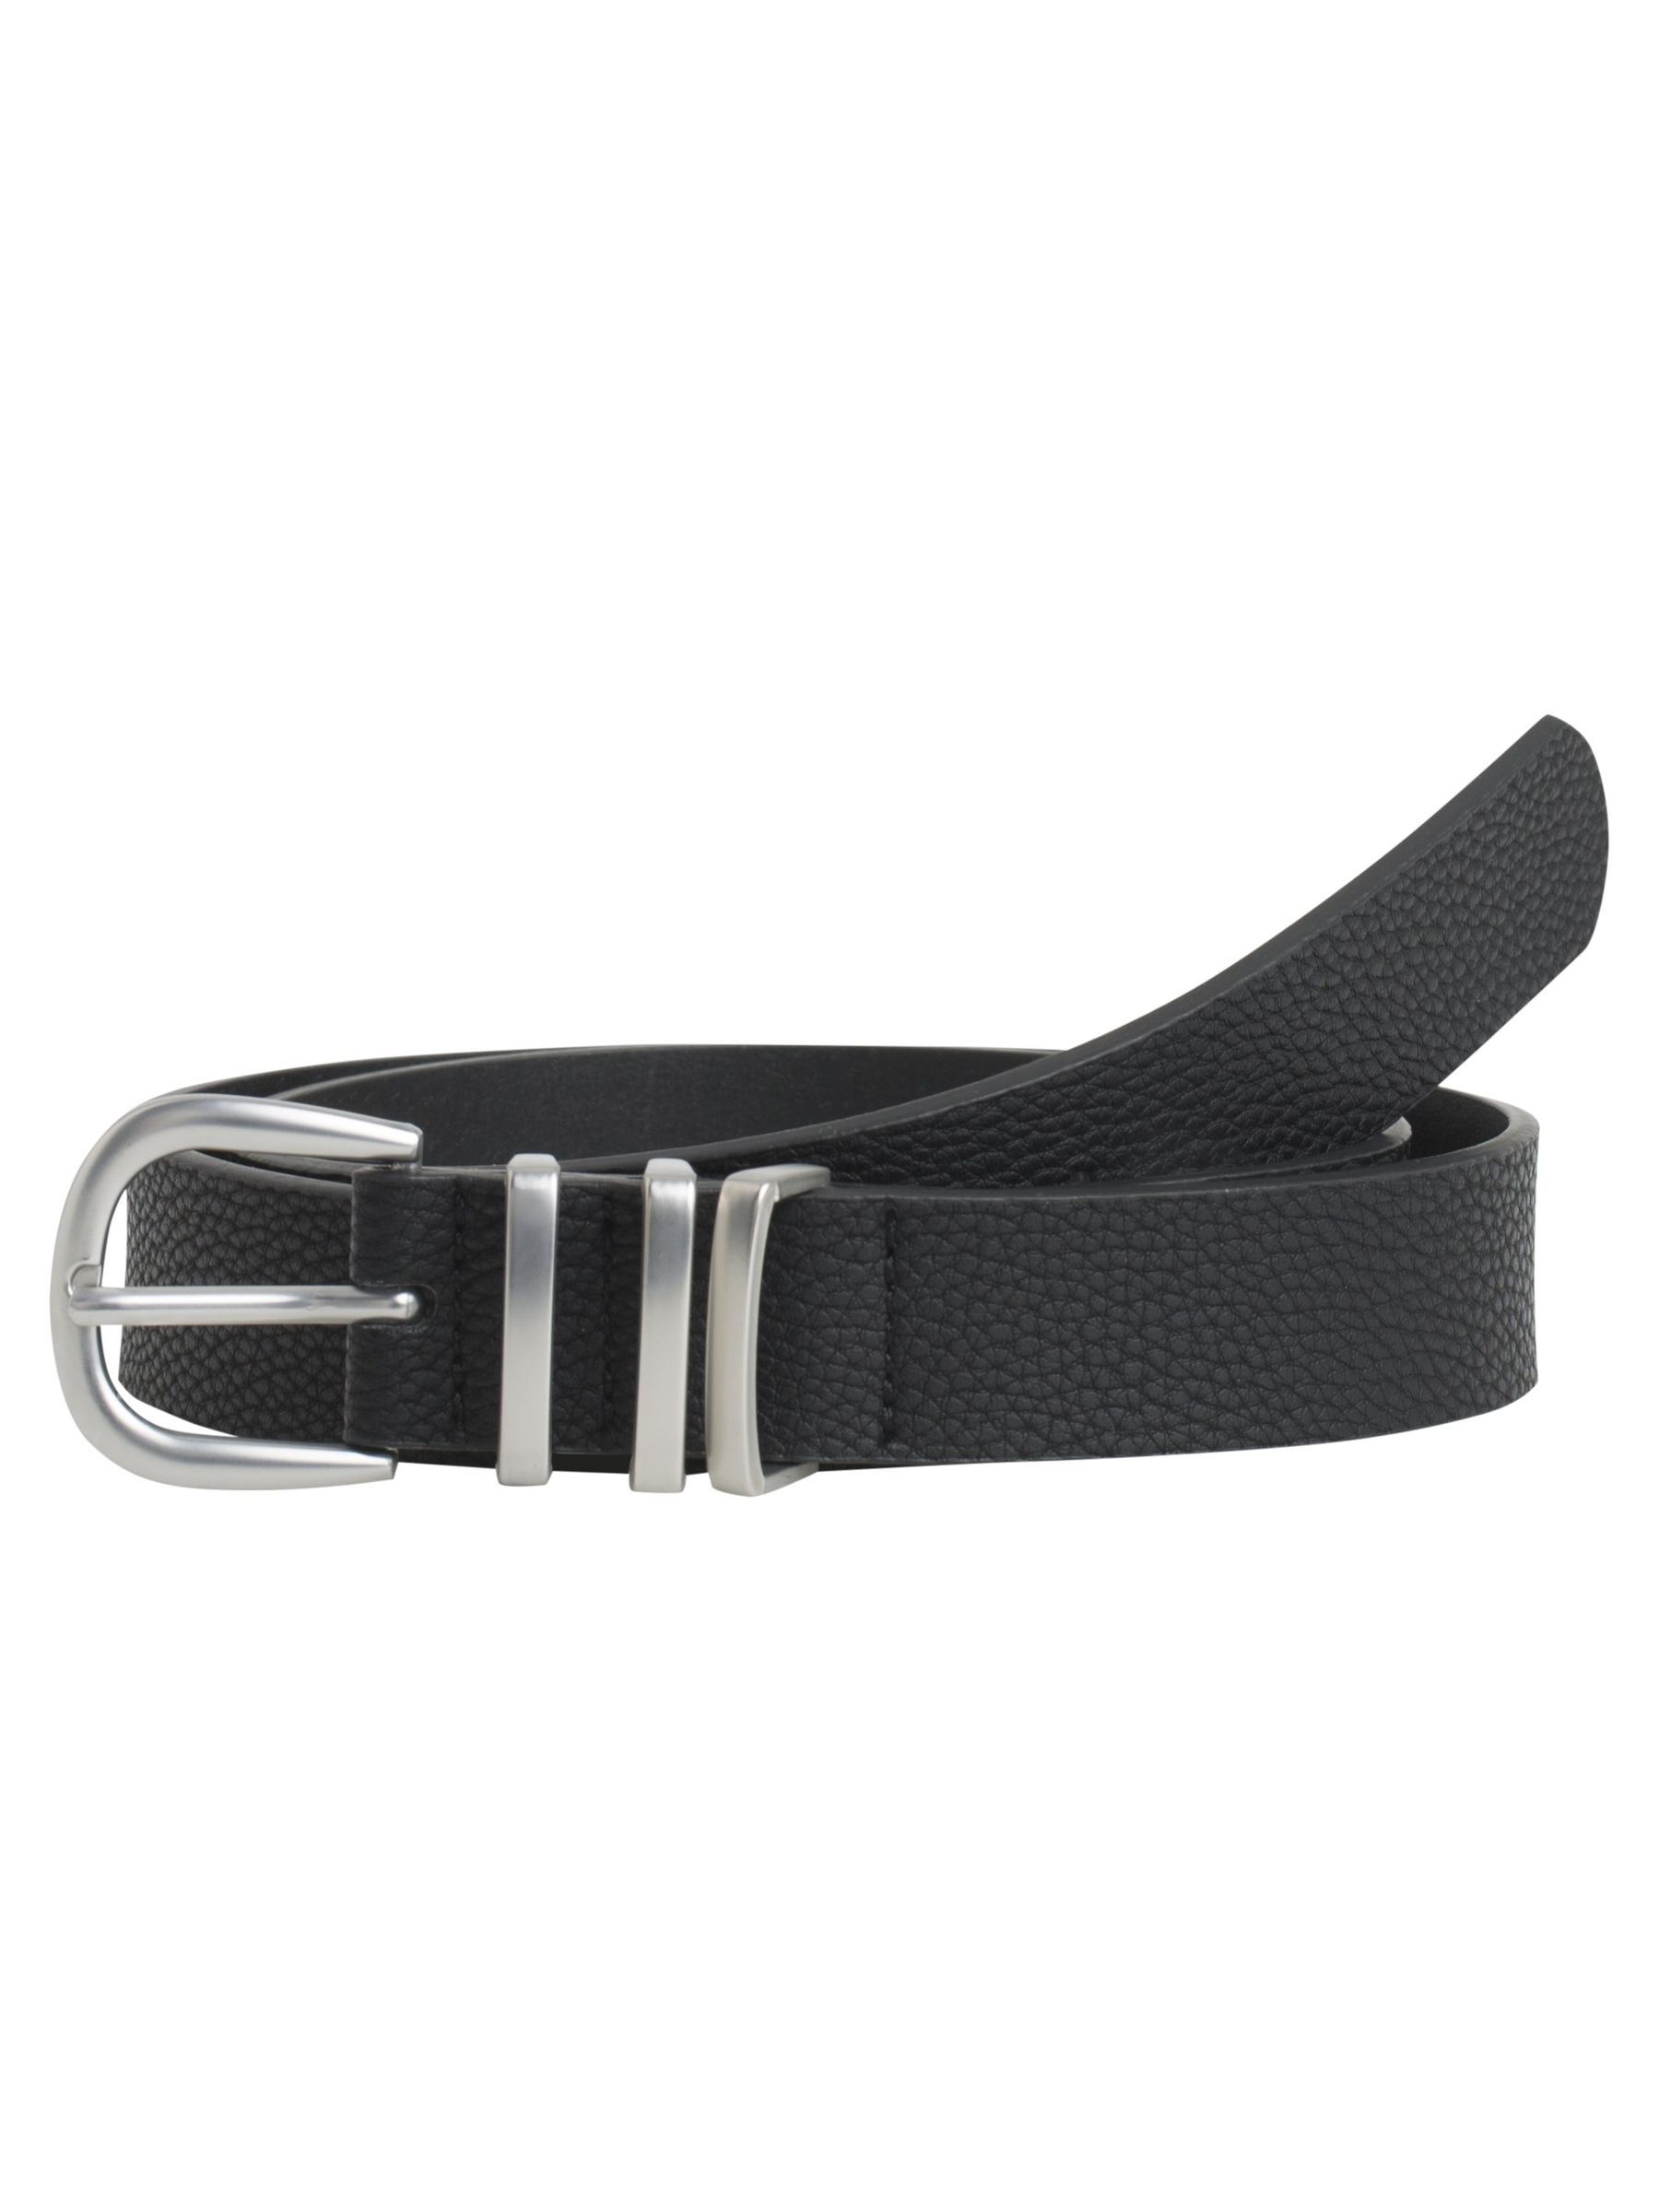 discount 69% White/Silver Single NoName belt WOMEN FASHION Accessories Belt White 